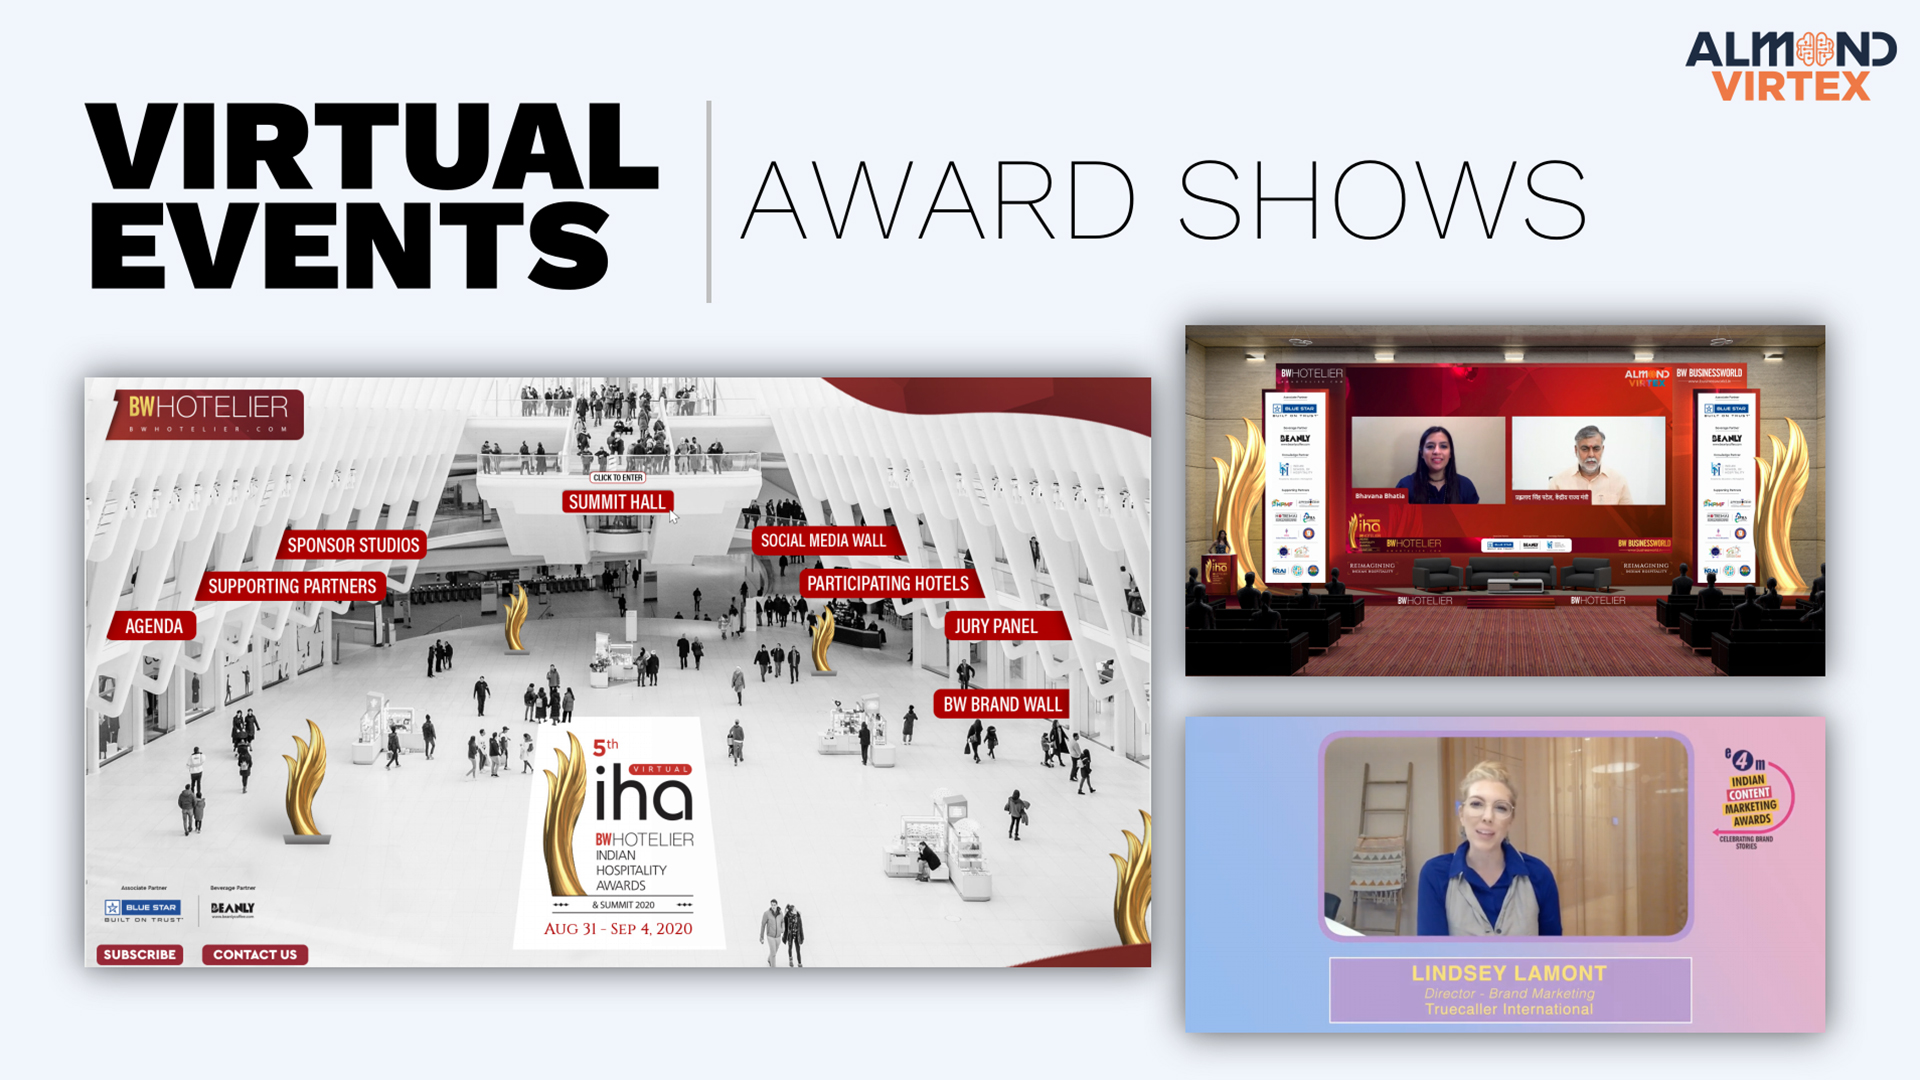 Almond Virtex Virtual Event Platform - Award Shows